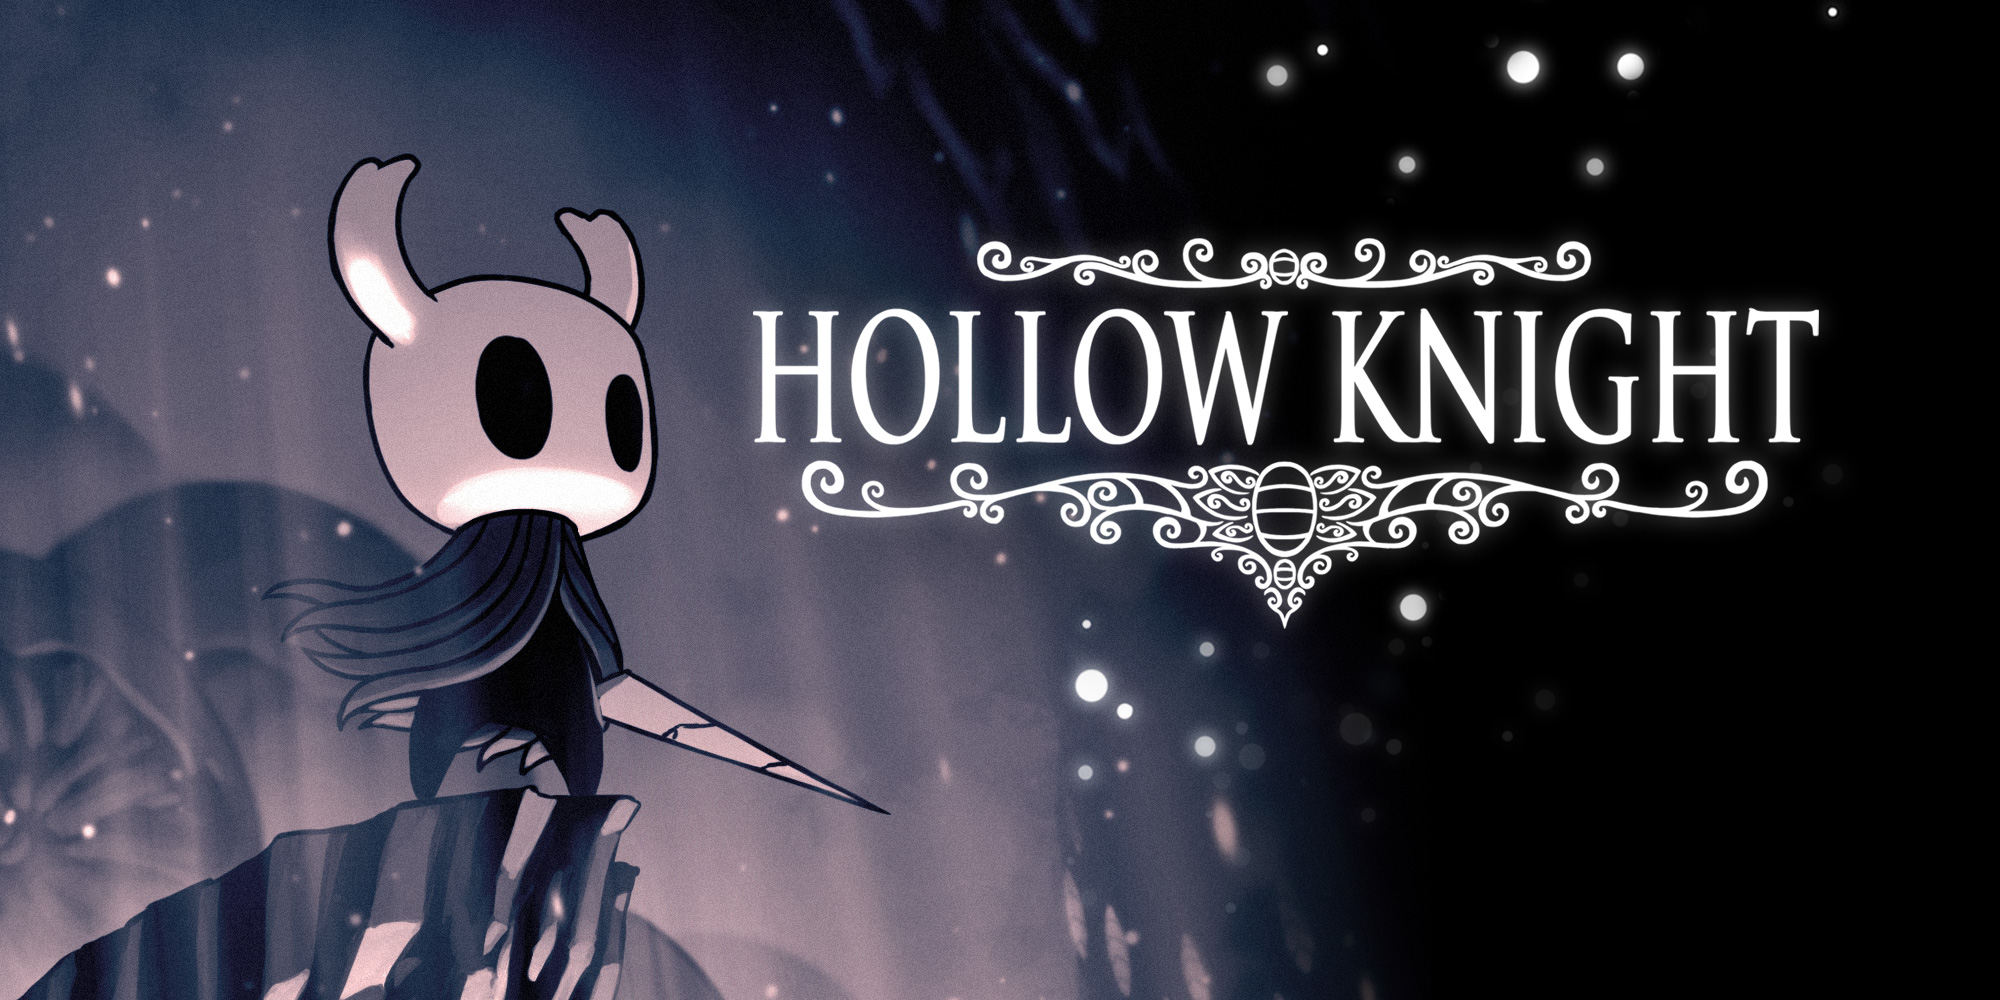 Hollow knight 2